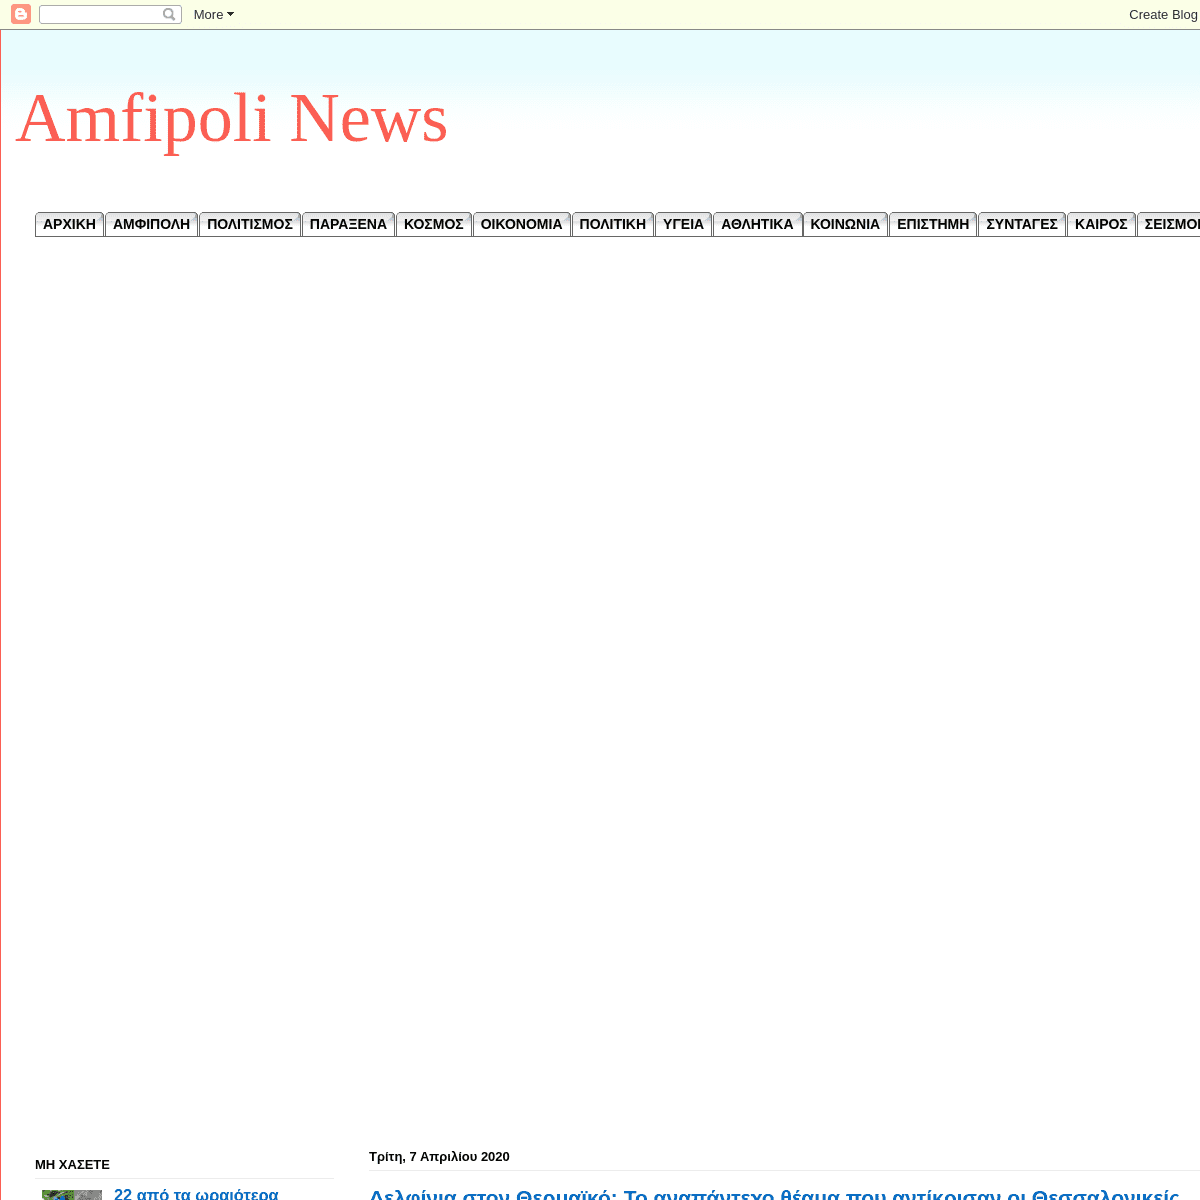 A complete backup of amfipolinews.blogspot.com